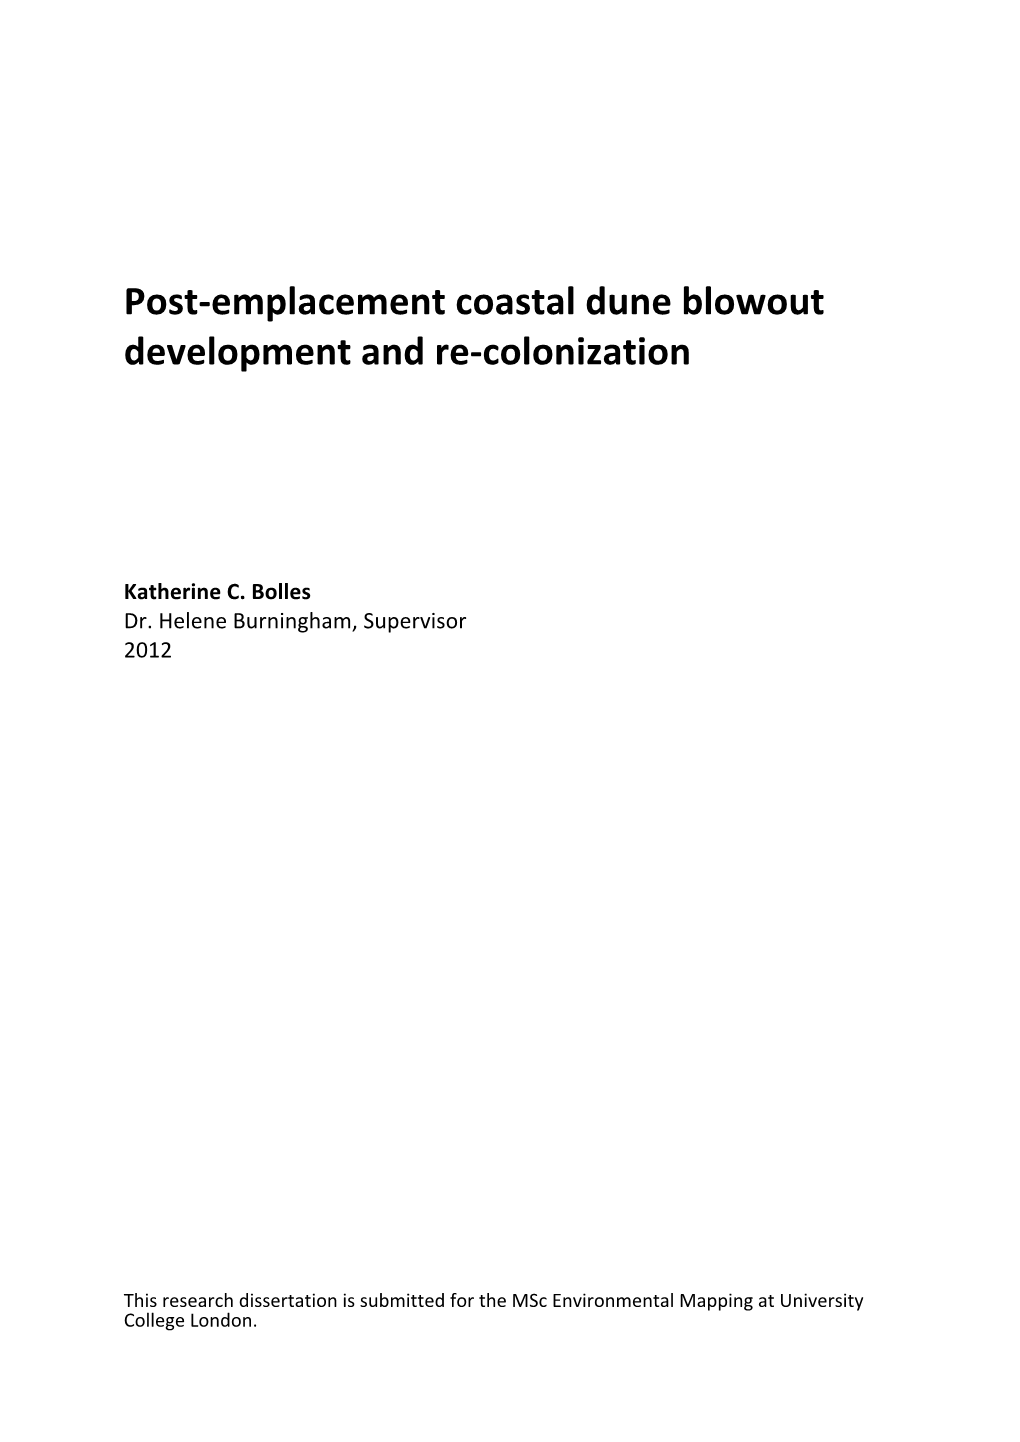 Post-‐Emplacement Coastal Dune Blowout